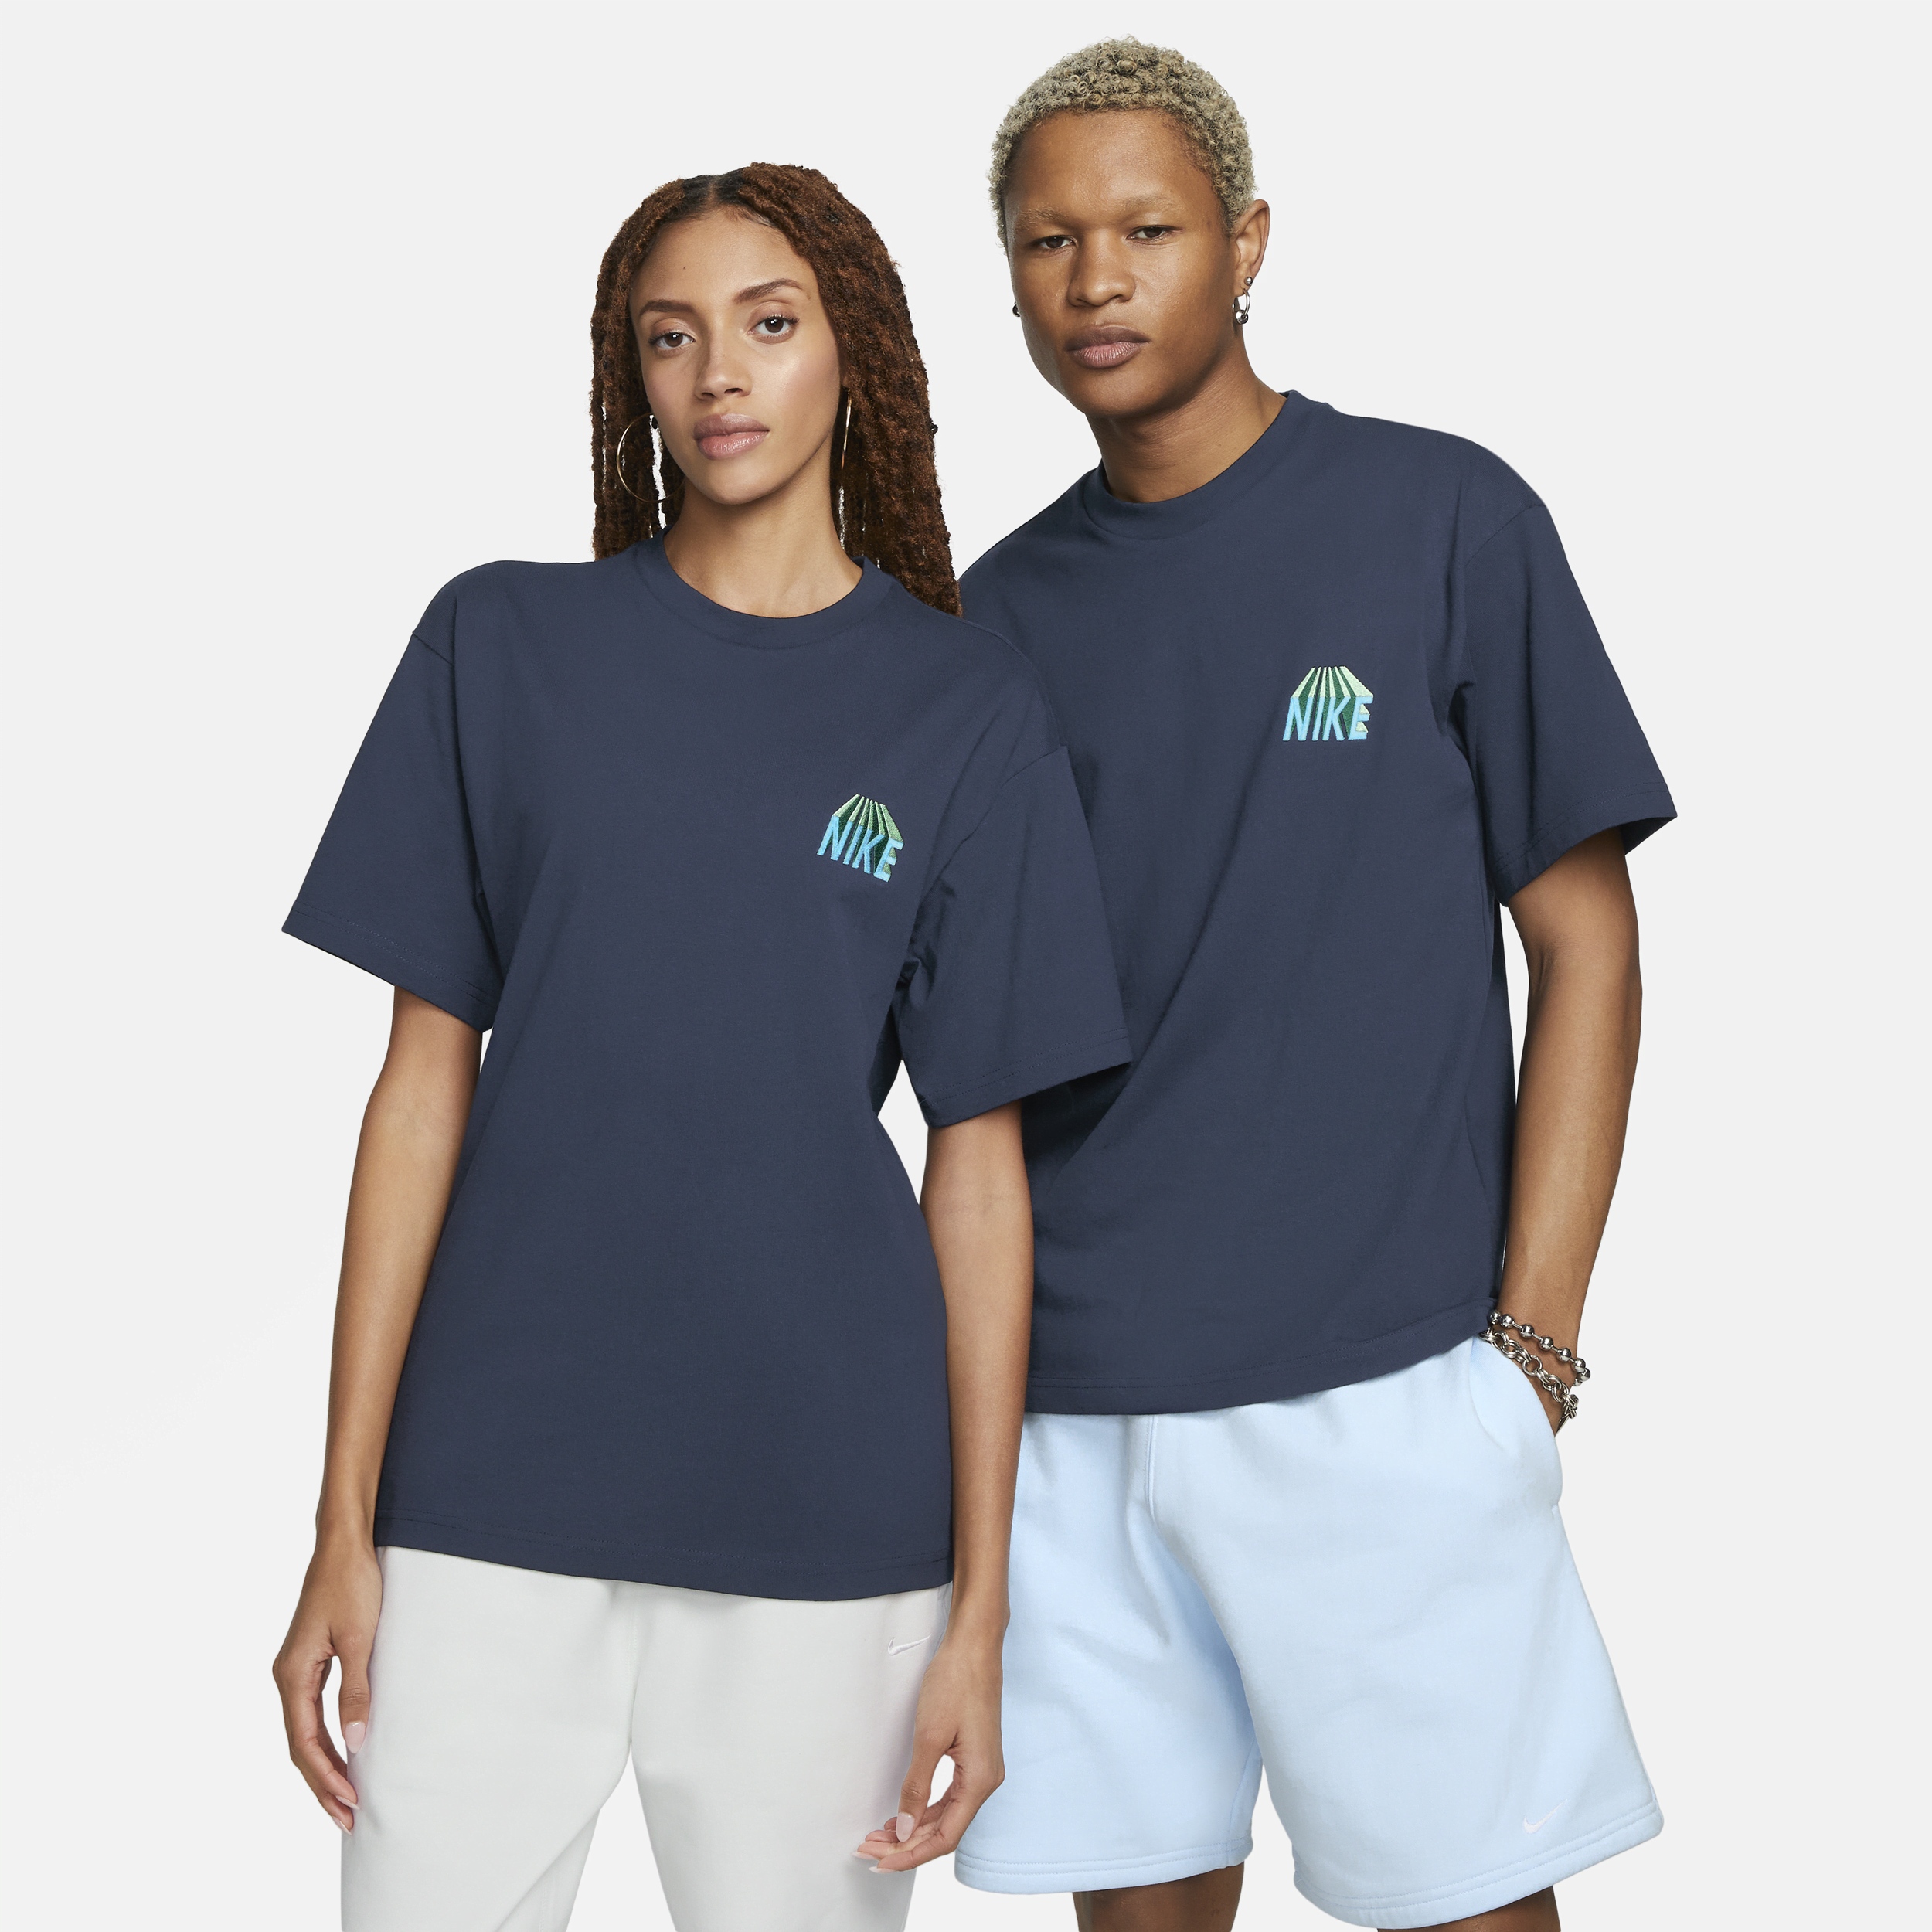 Nike-T-shirt - blå